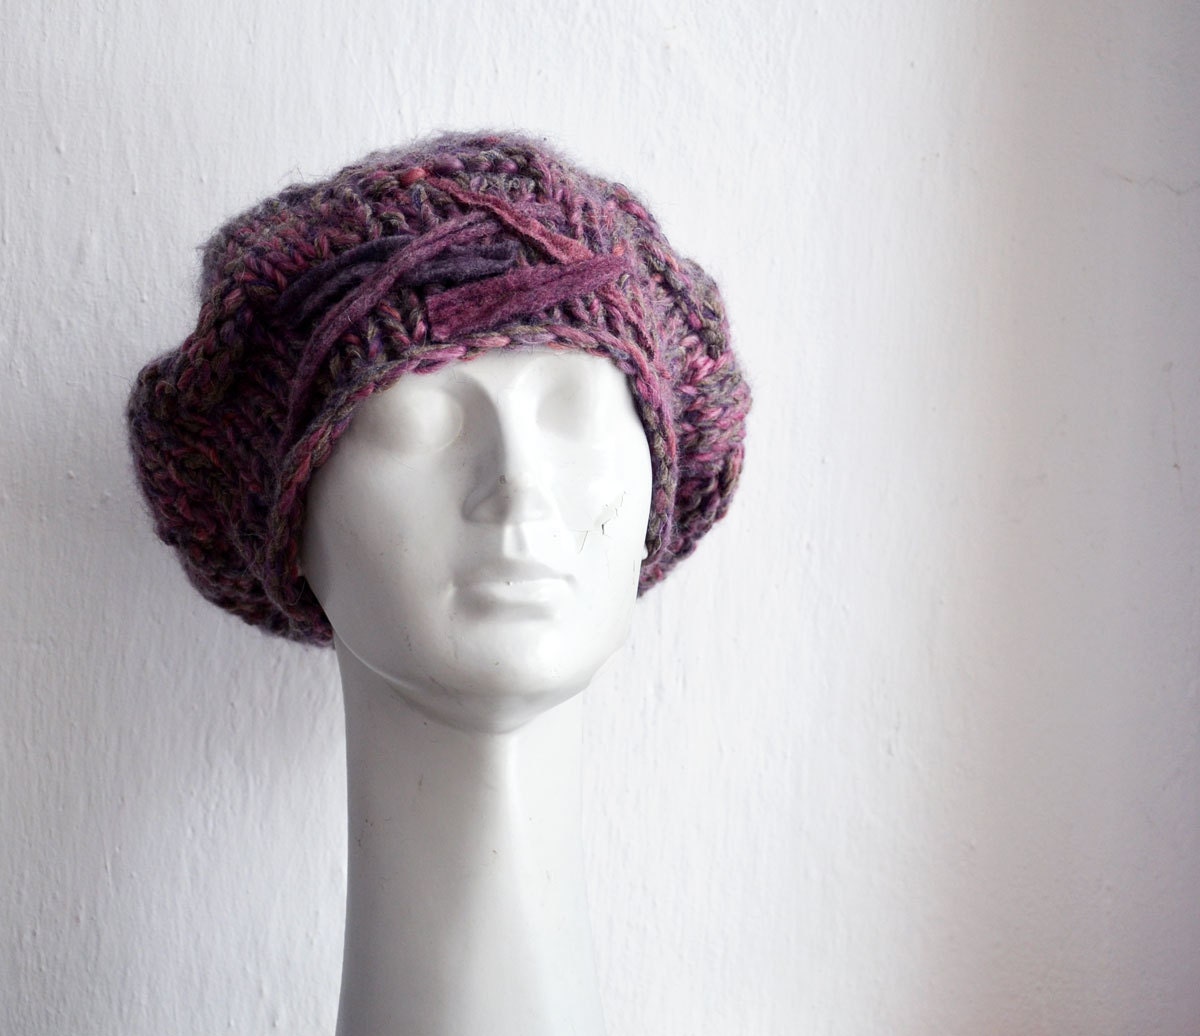 winter hat, Hand knitted beret, soft, ooak, unique fashion design, beige, violet felt sripe applique, warm cozy hat, vanguard - ZOJKAshop